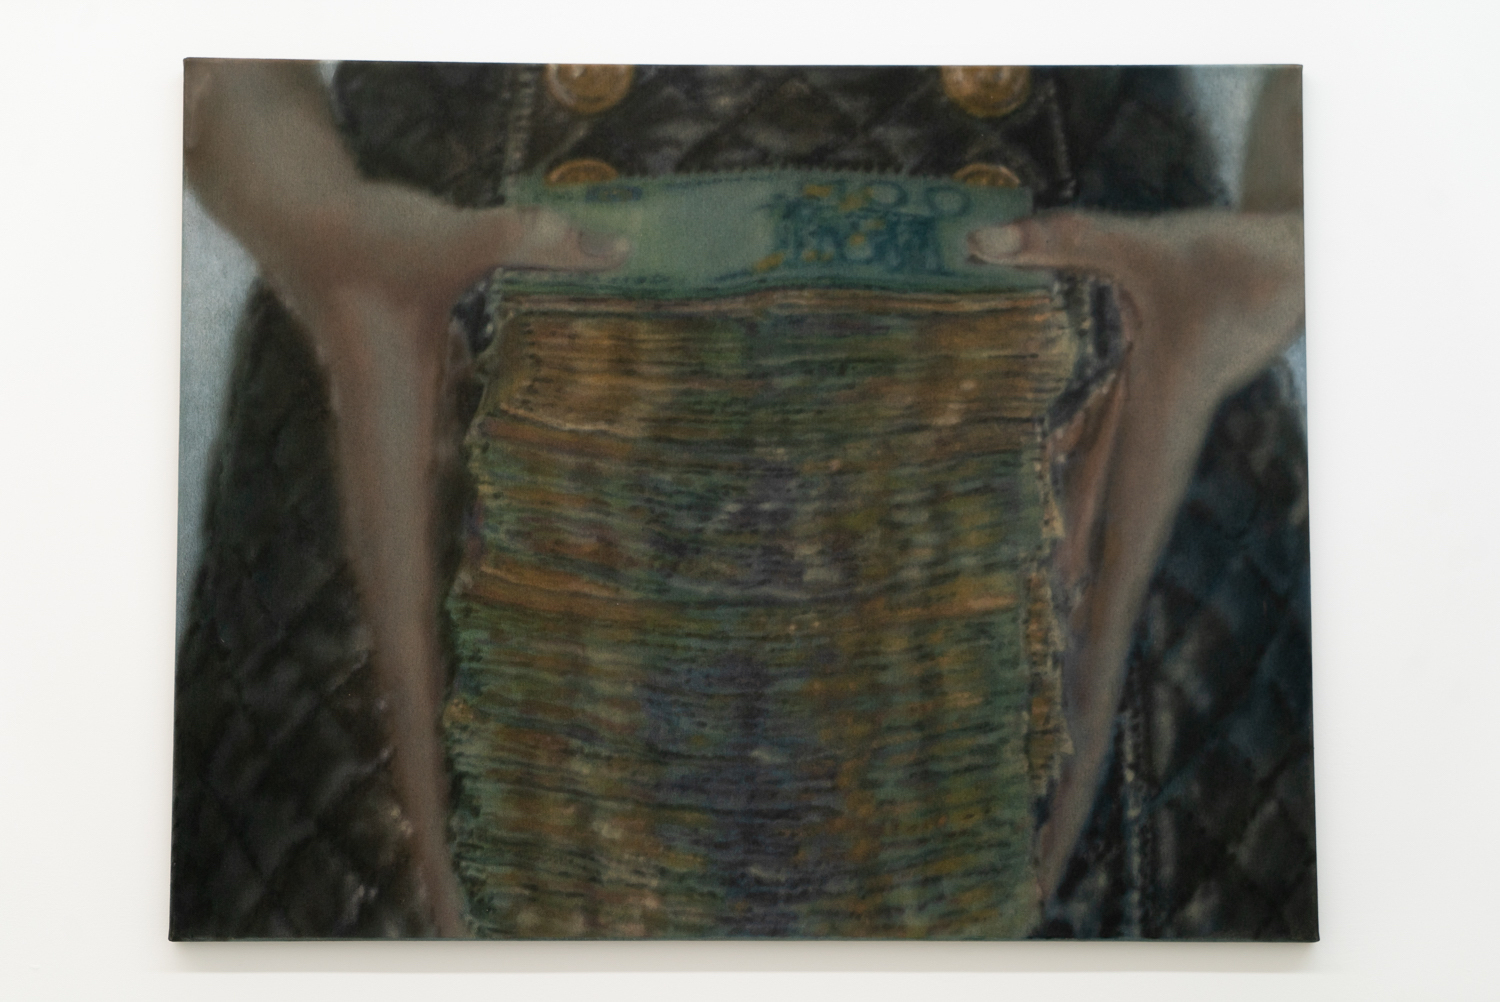 Sarah Fripon, "Money Brick", 2021, Acrylic on canvas, 31 x 43 inches.